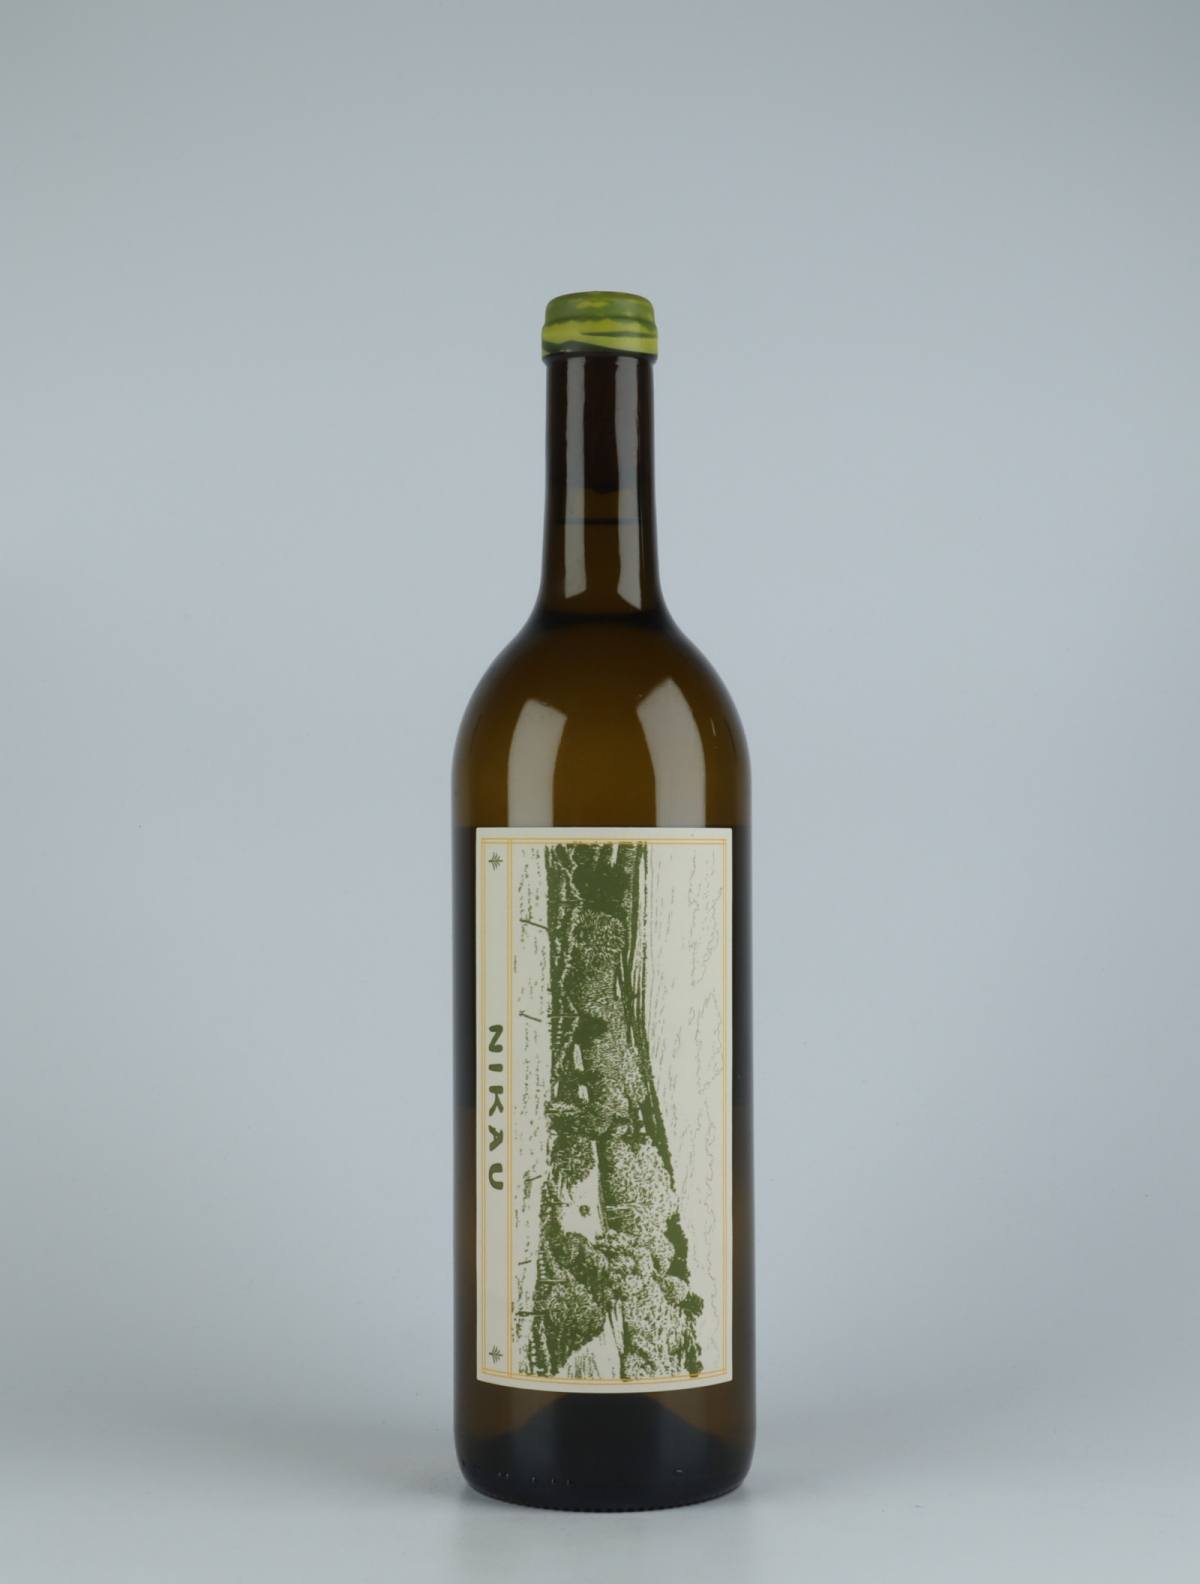 A bottle 2018 Tolone White White wine from Nikau Farm, Victoria in Australia